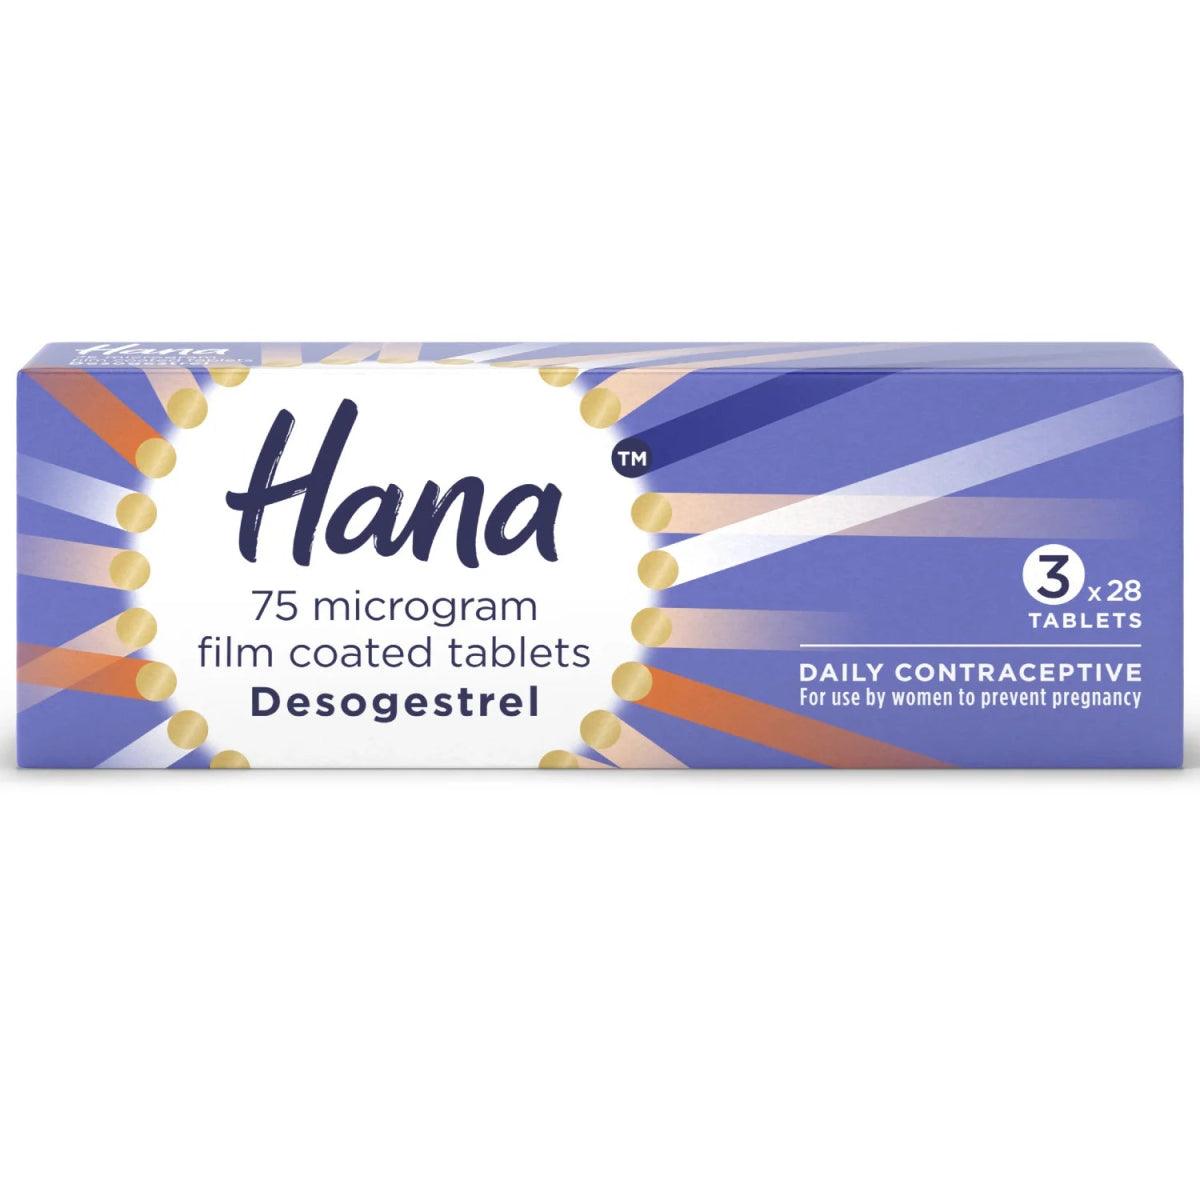 Hana 75 Microgram Film-coated - Rightangled